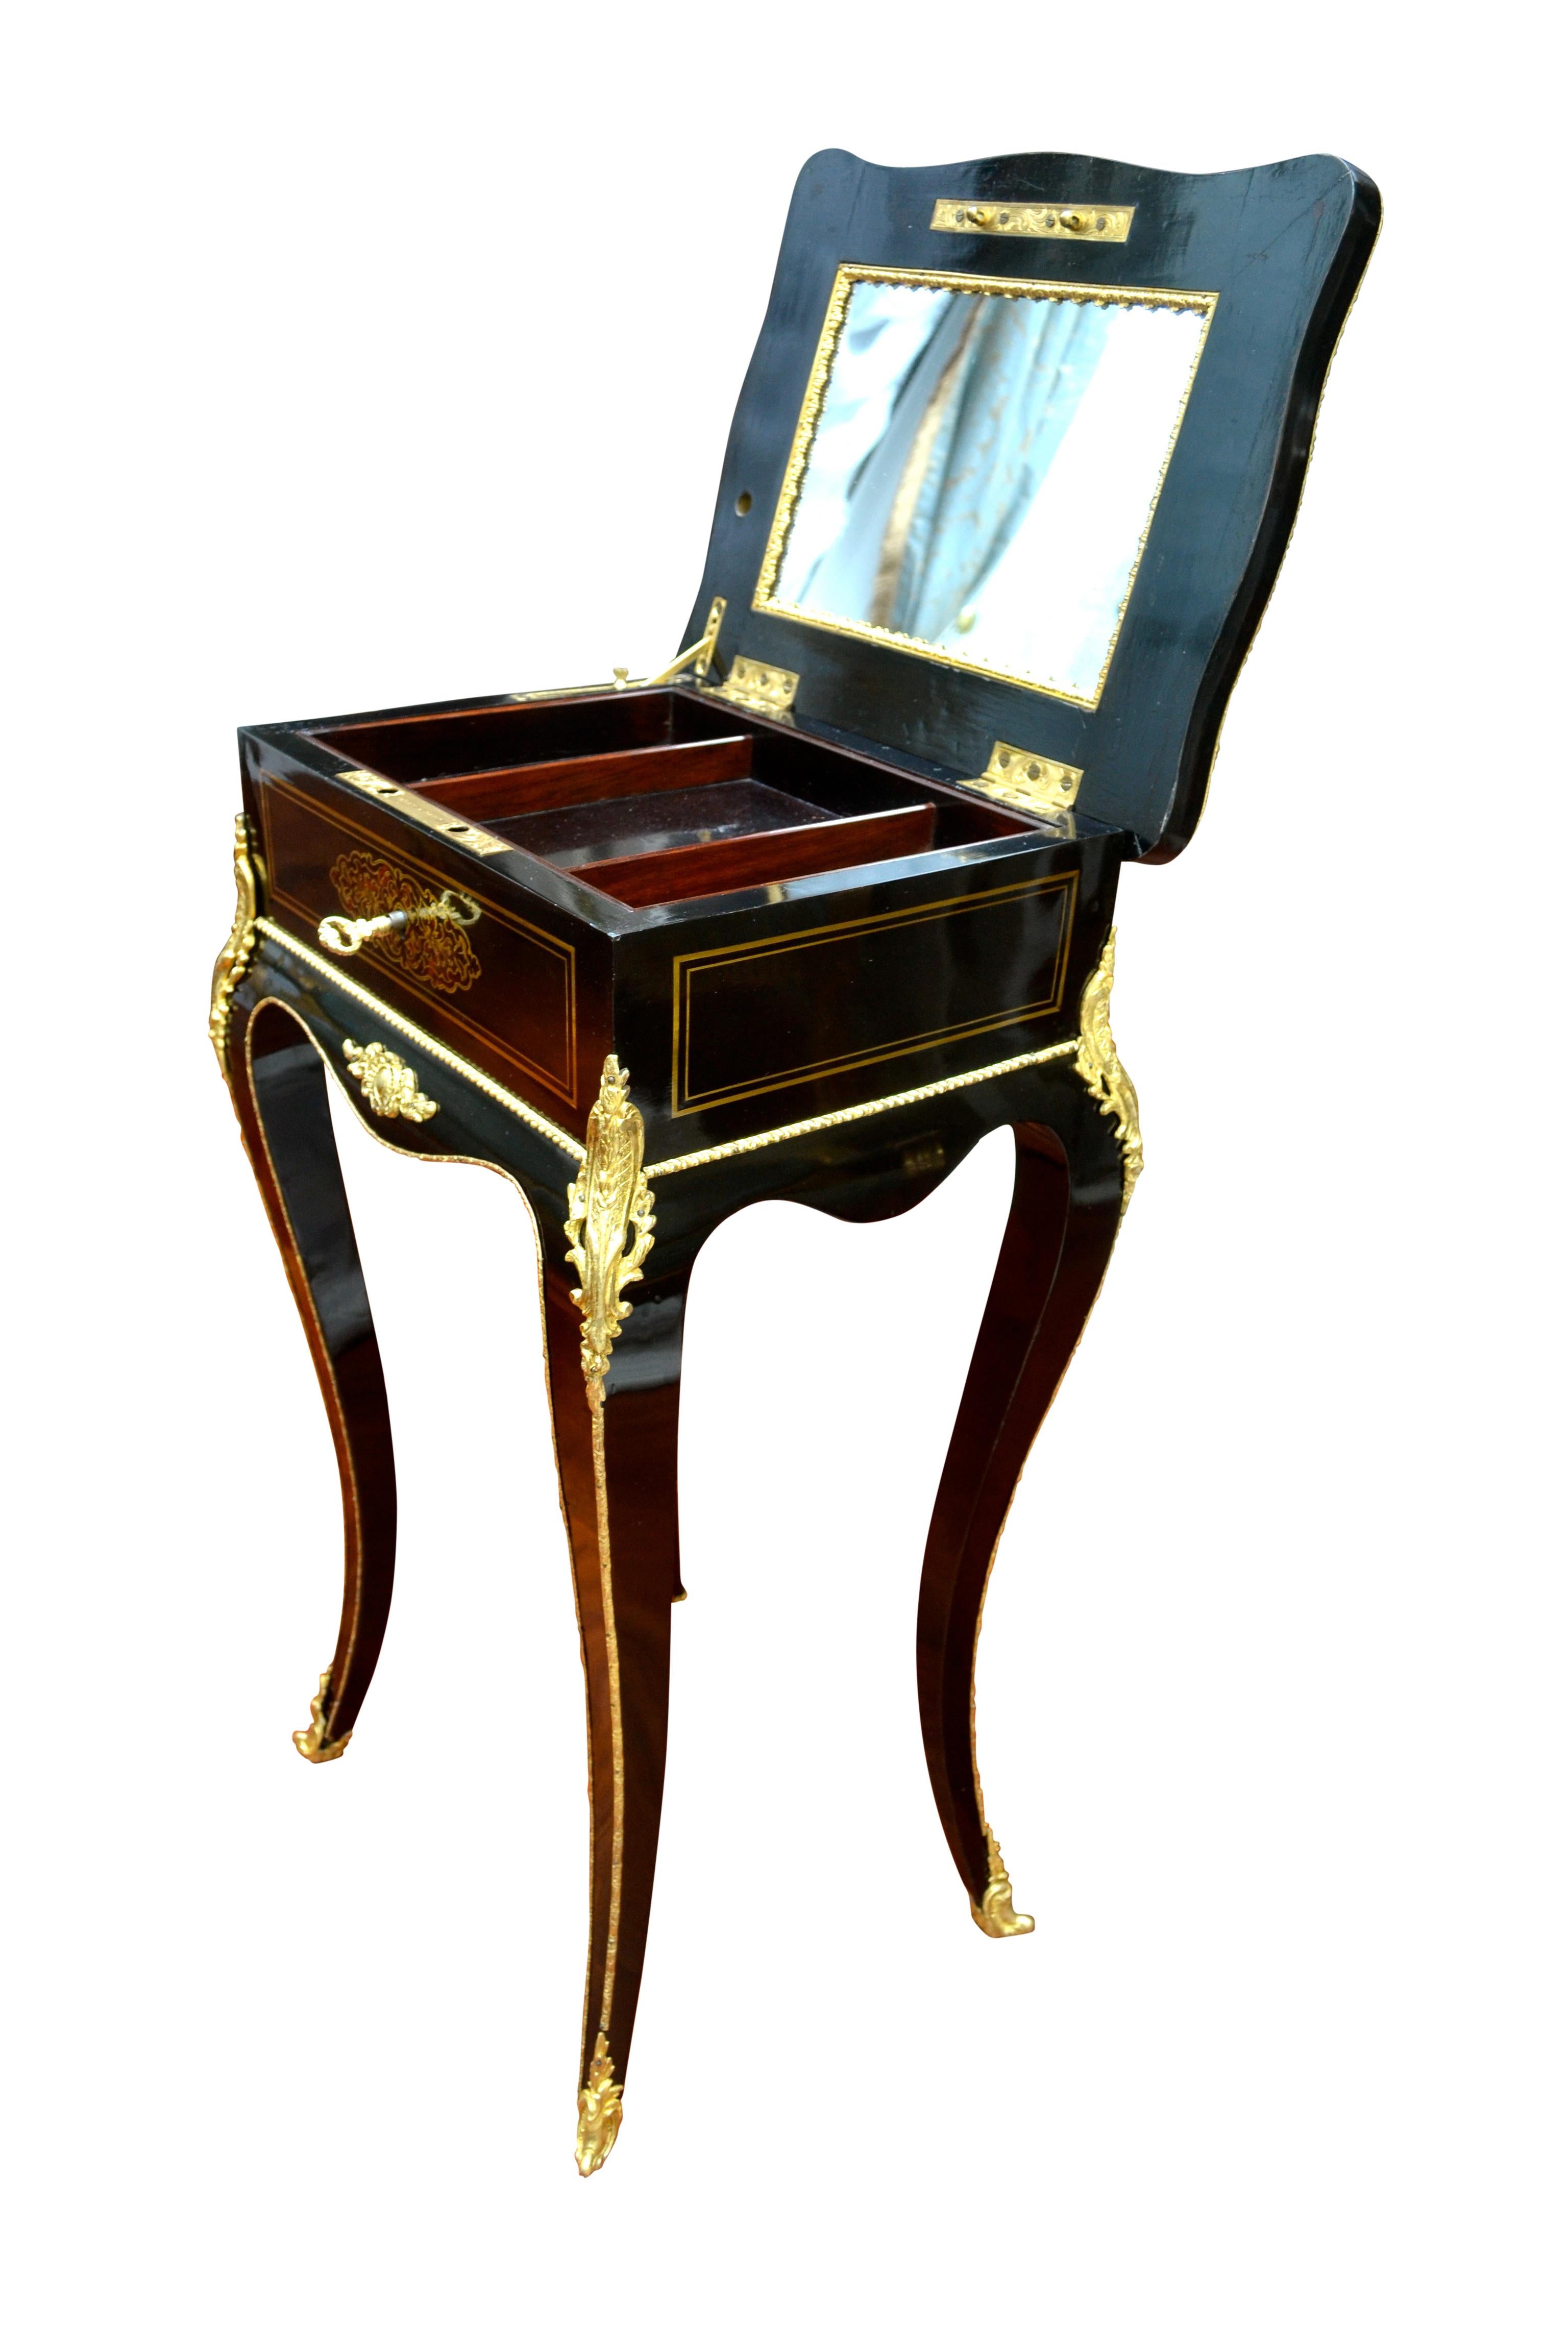 Gilt Napoleon III Ebonized Wood, Brass Inlay and Ormolu Jewelry Table by Tahan